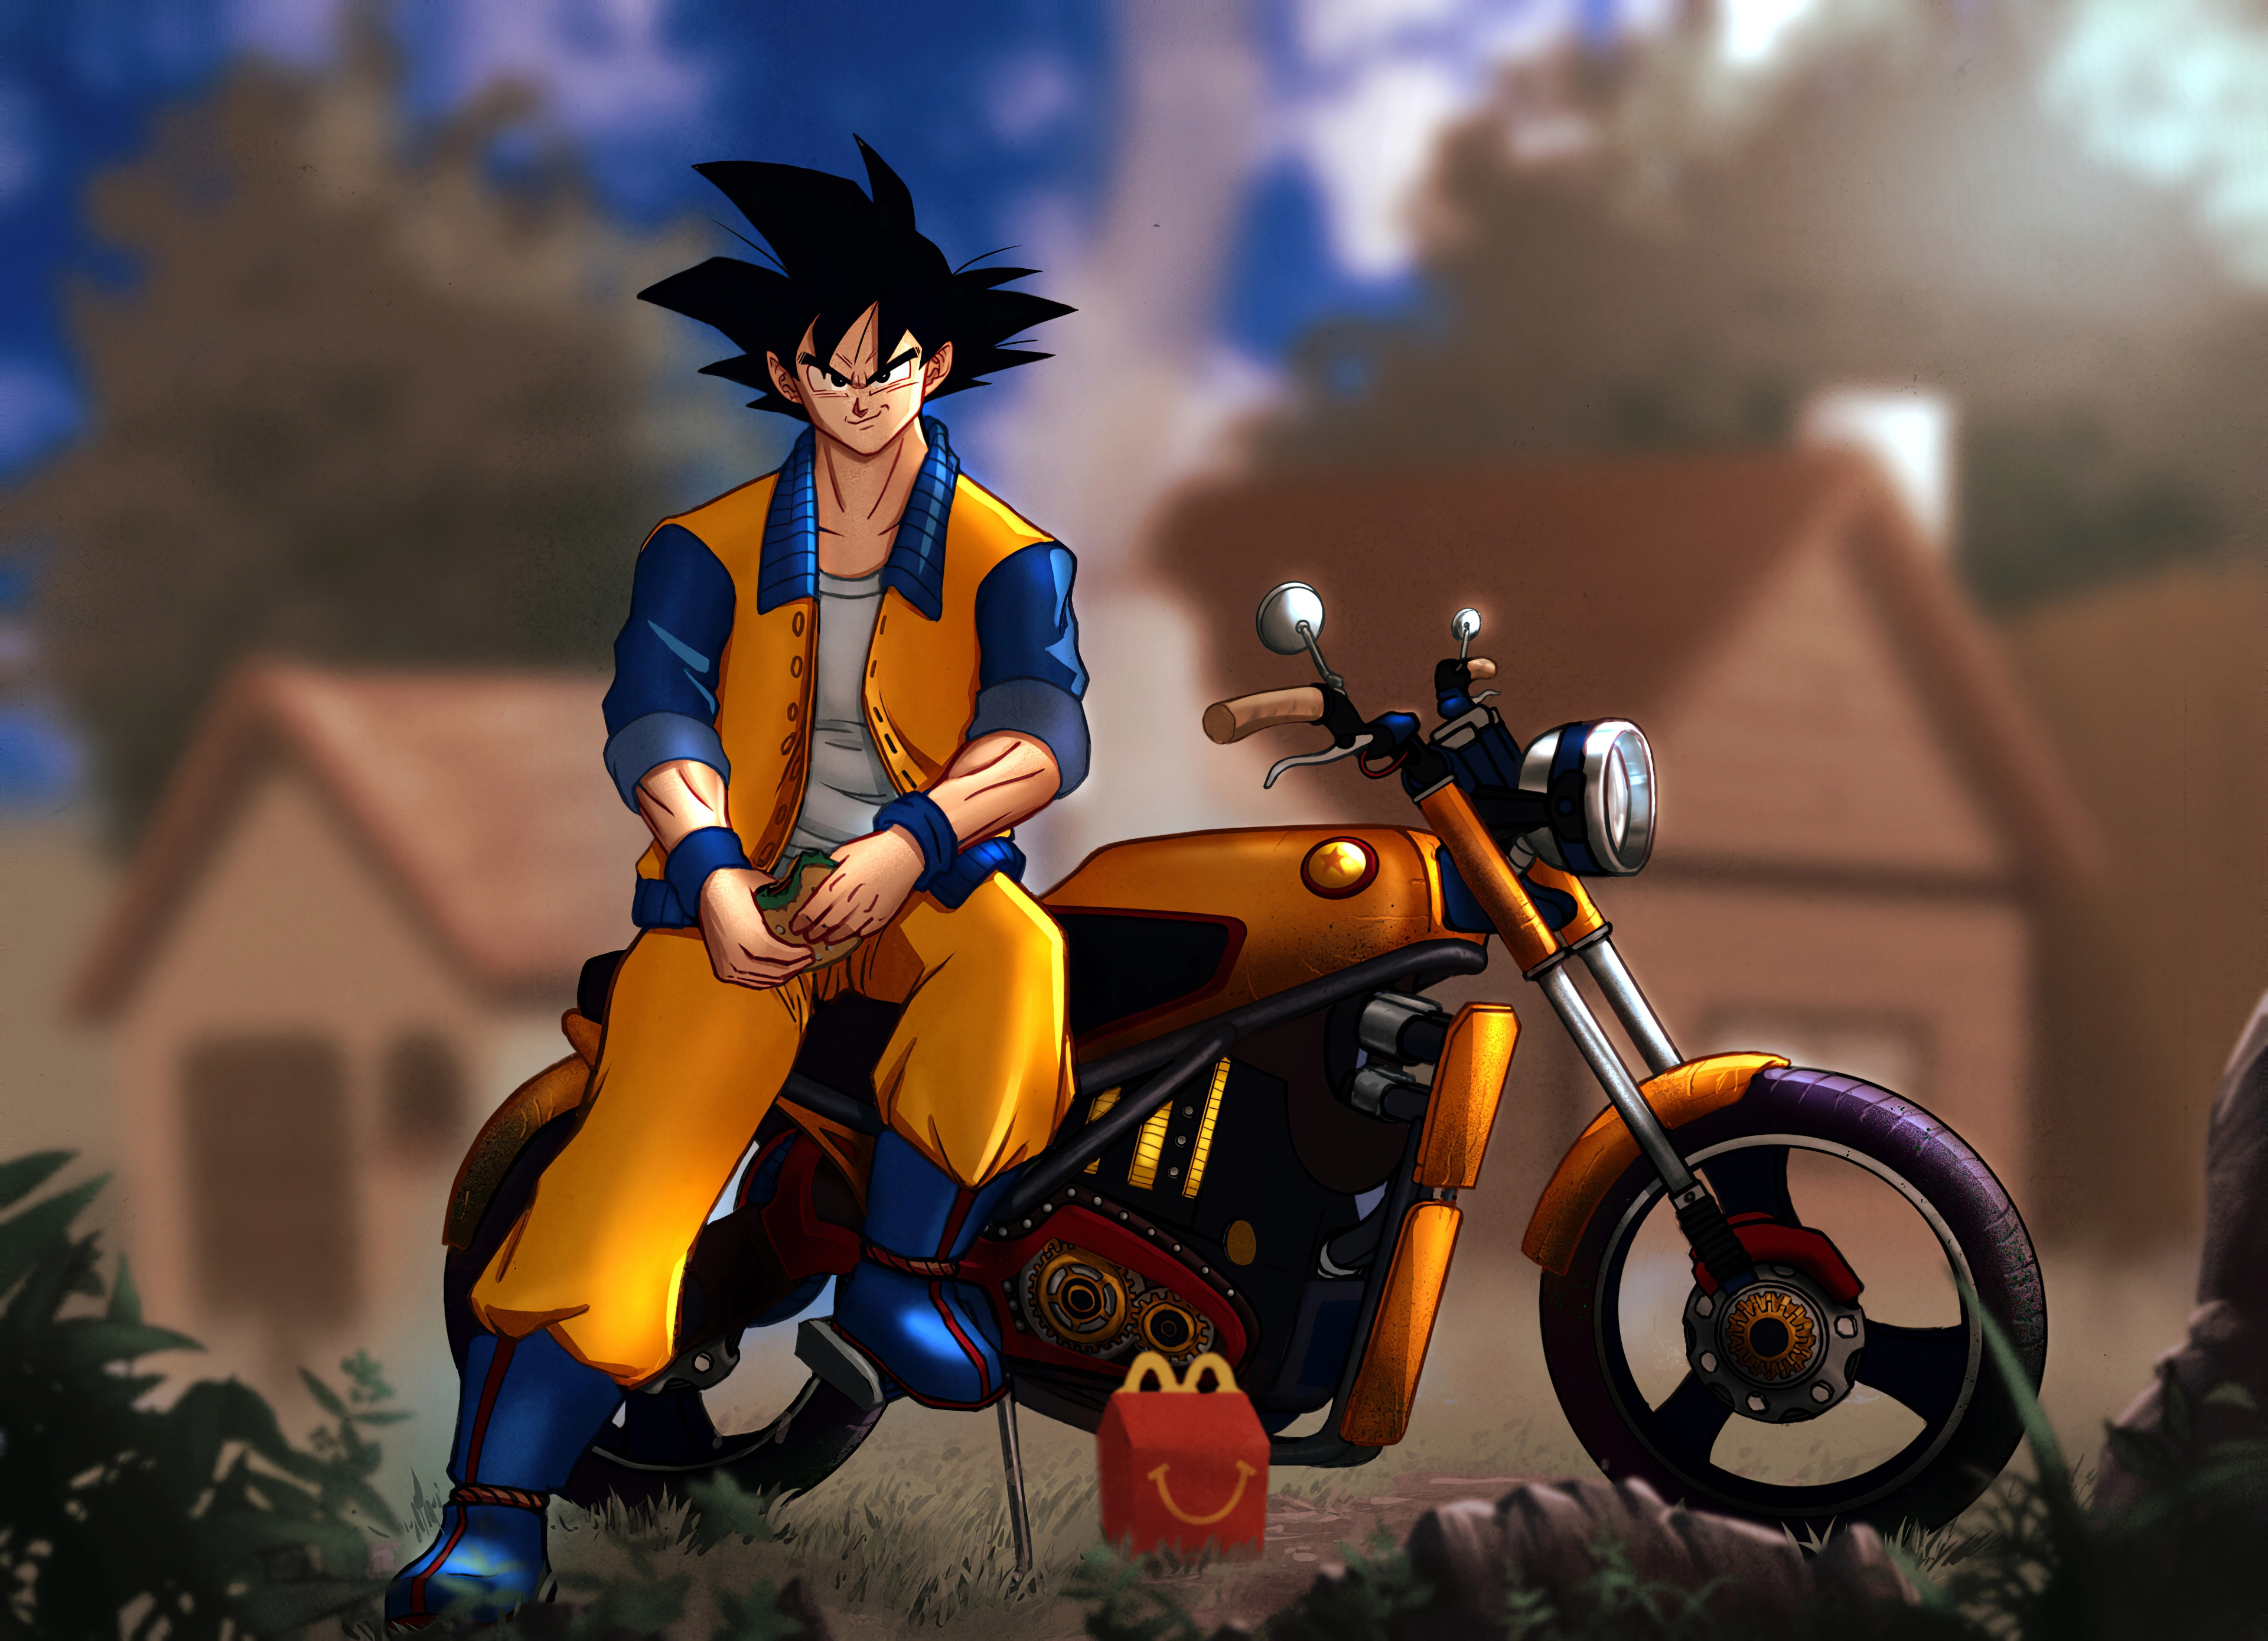 goku sitting on bike anime 4k 1696778083